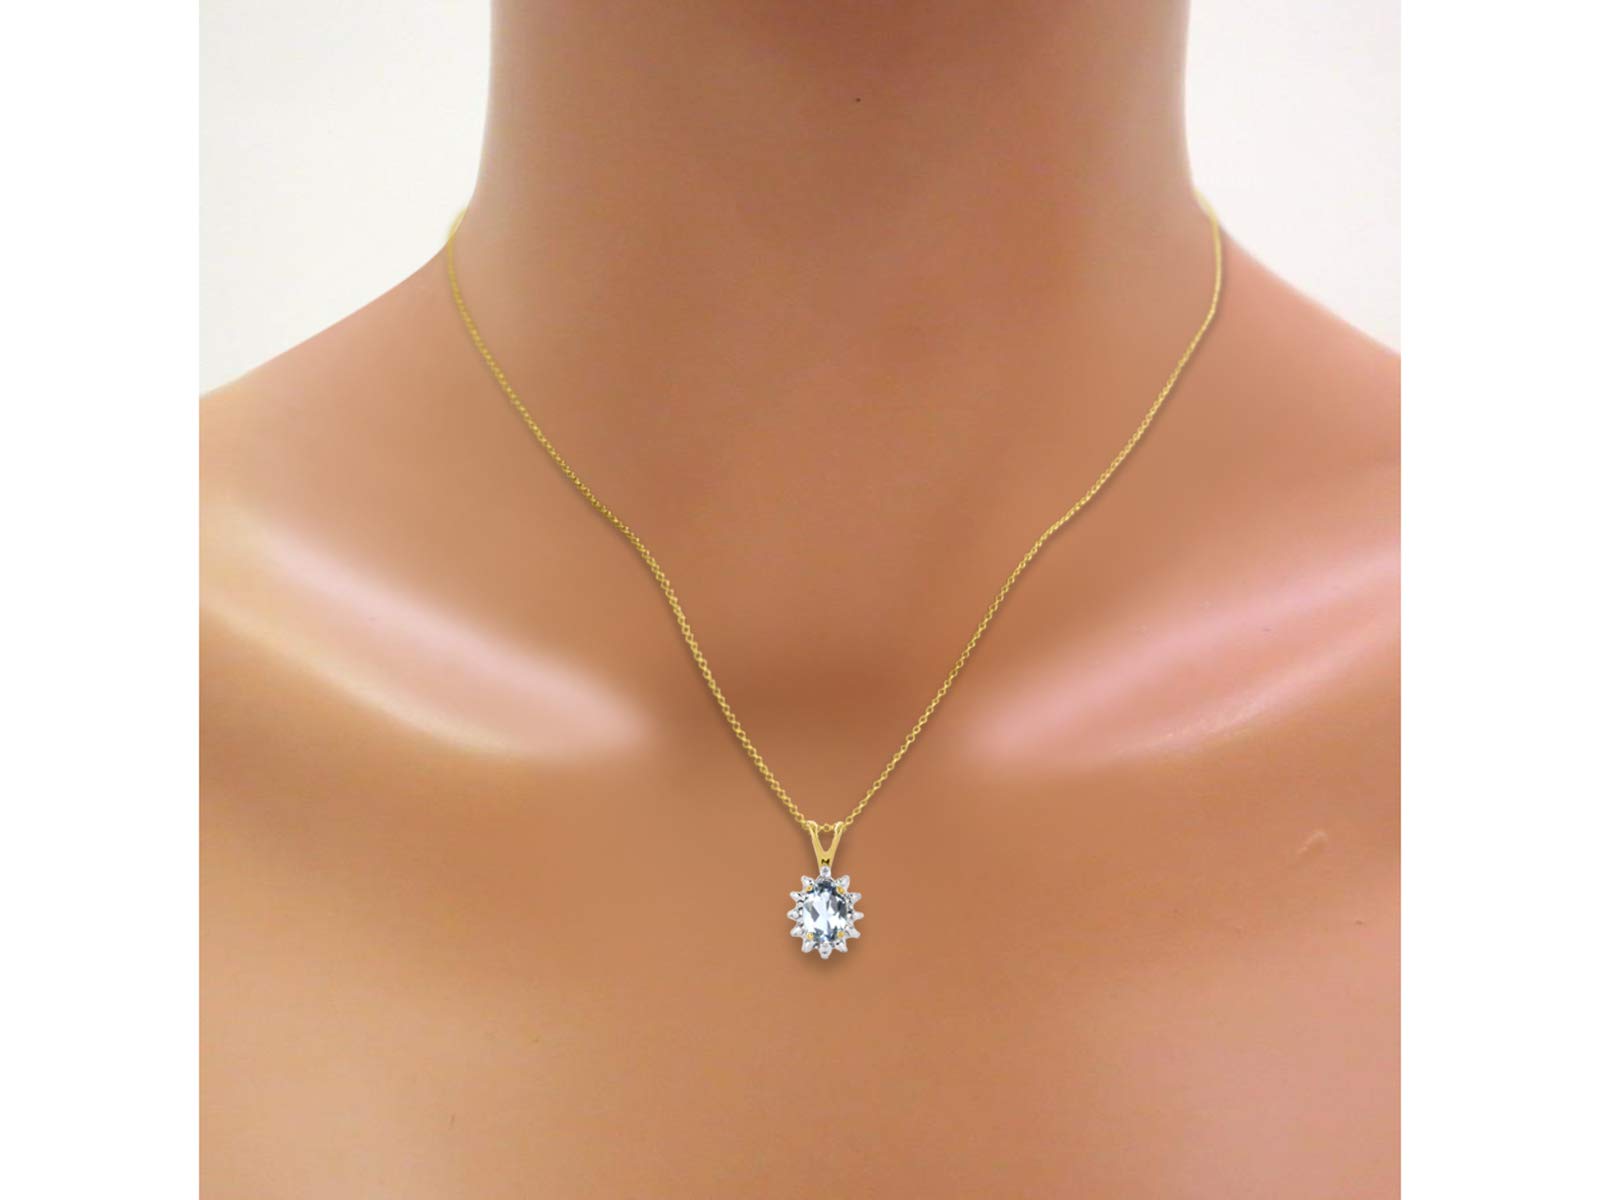 Rylos Simply Elegant Beautiful Aquamarine & Diamond Matching Set - Ring, Earrings and Pendant Necklace - March Birthstone*